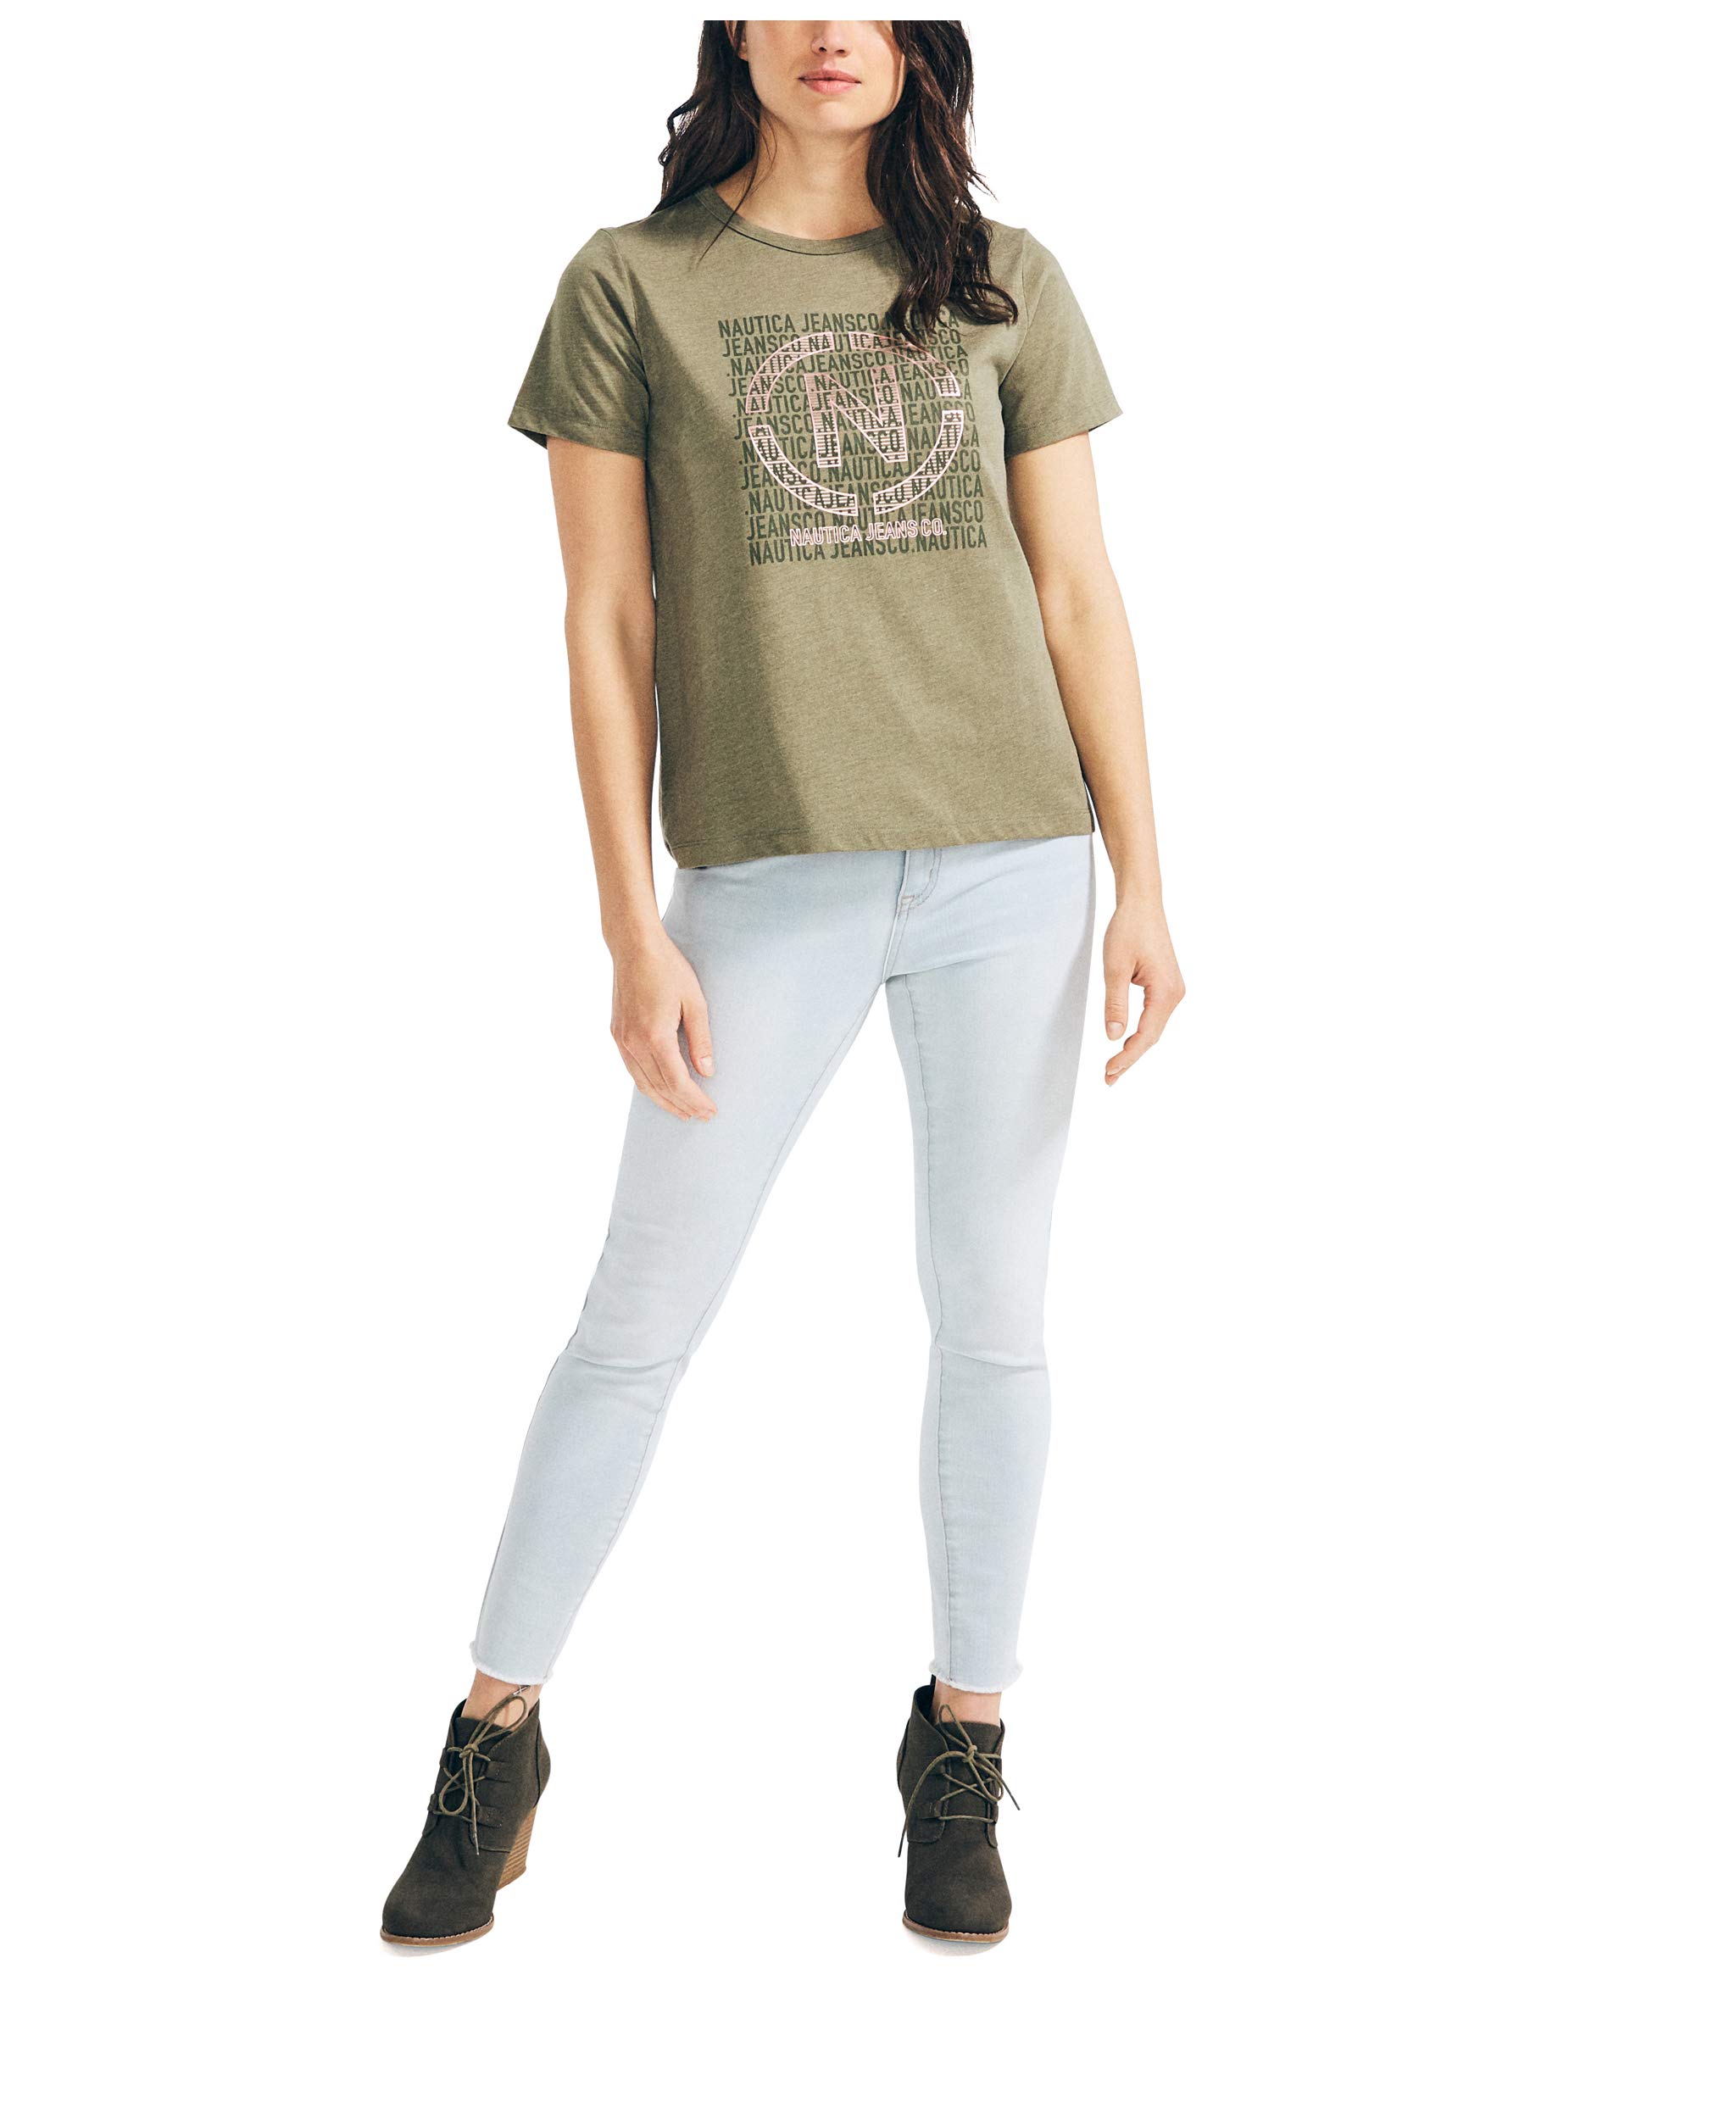 Nautica Women's Soft Cotton Graphic T-Shirt